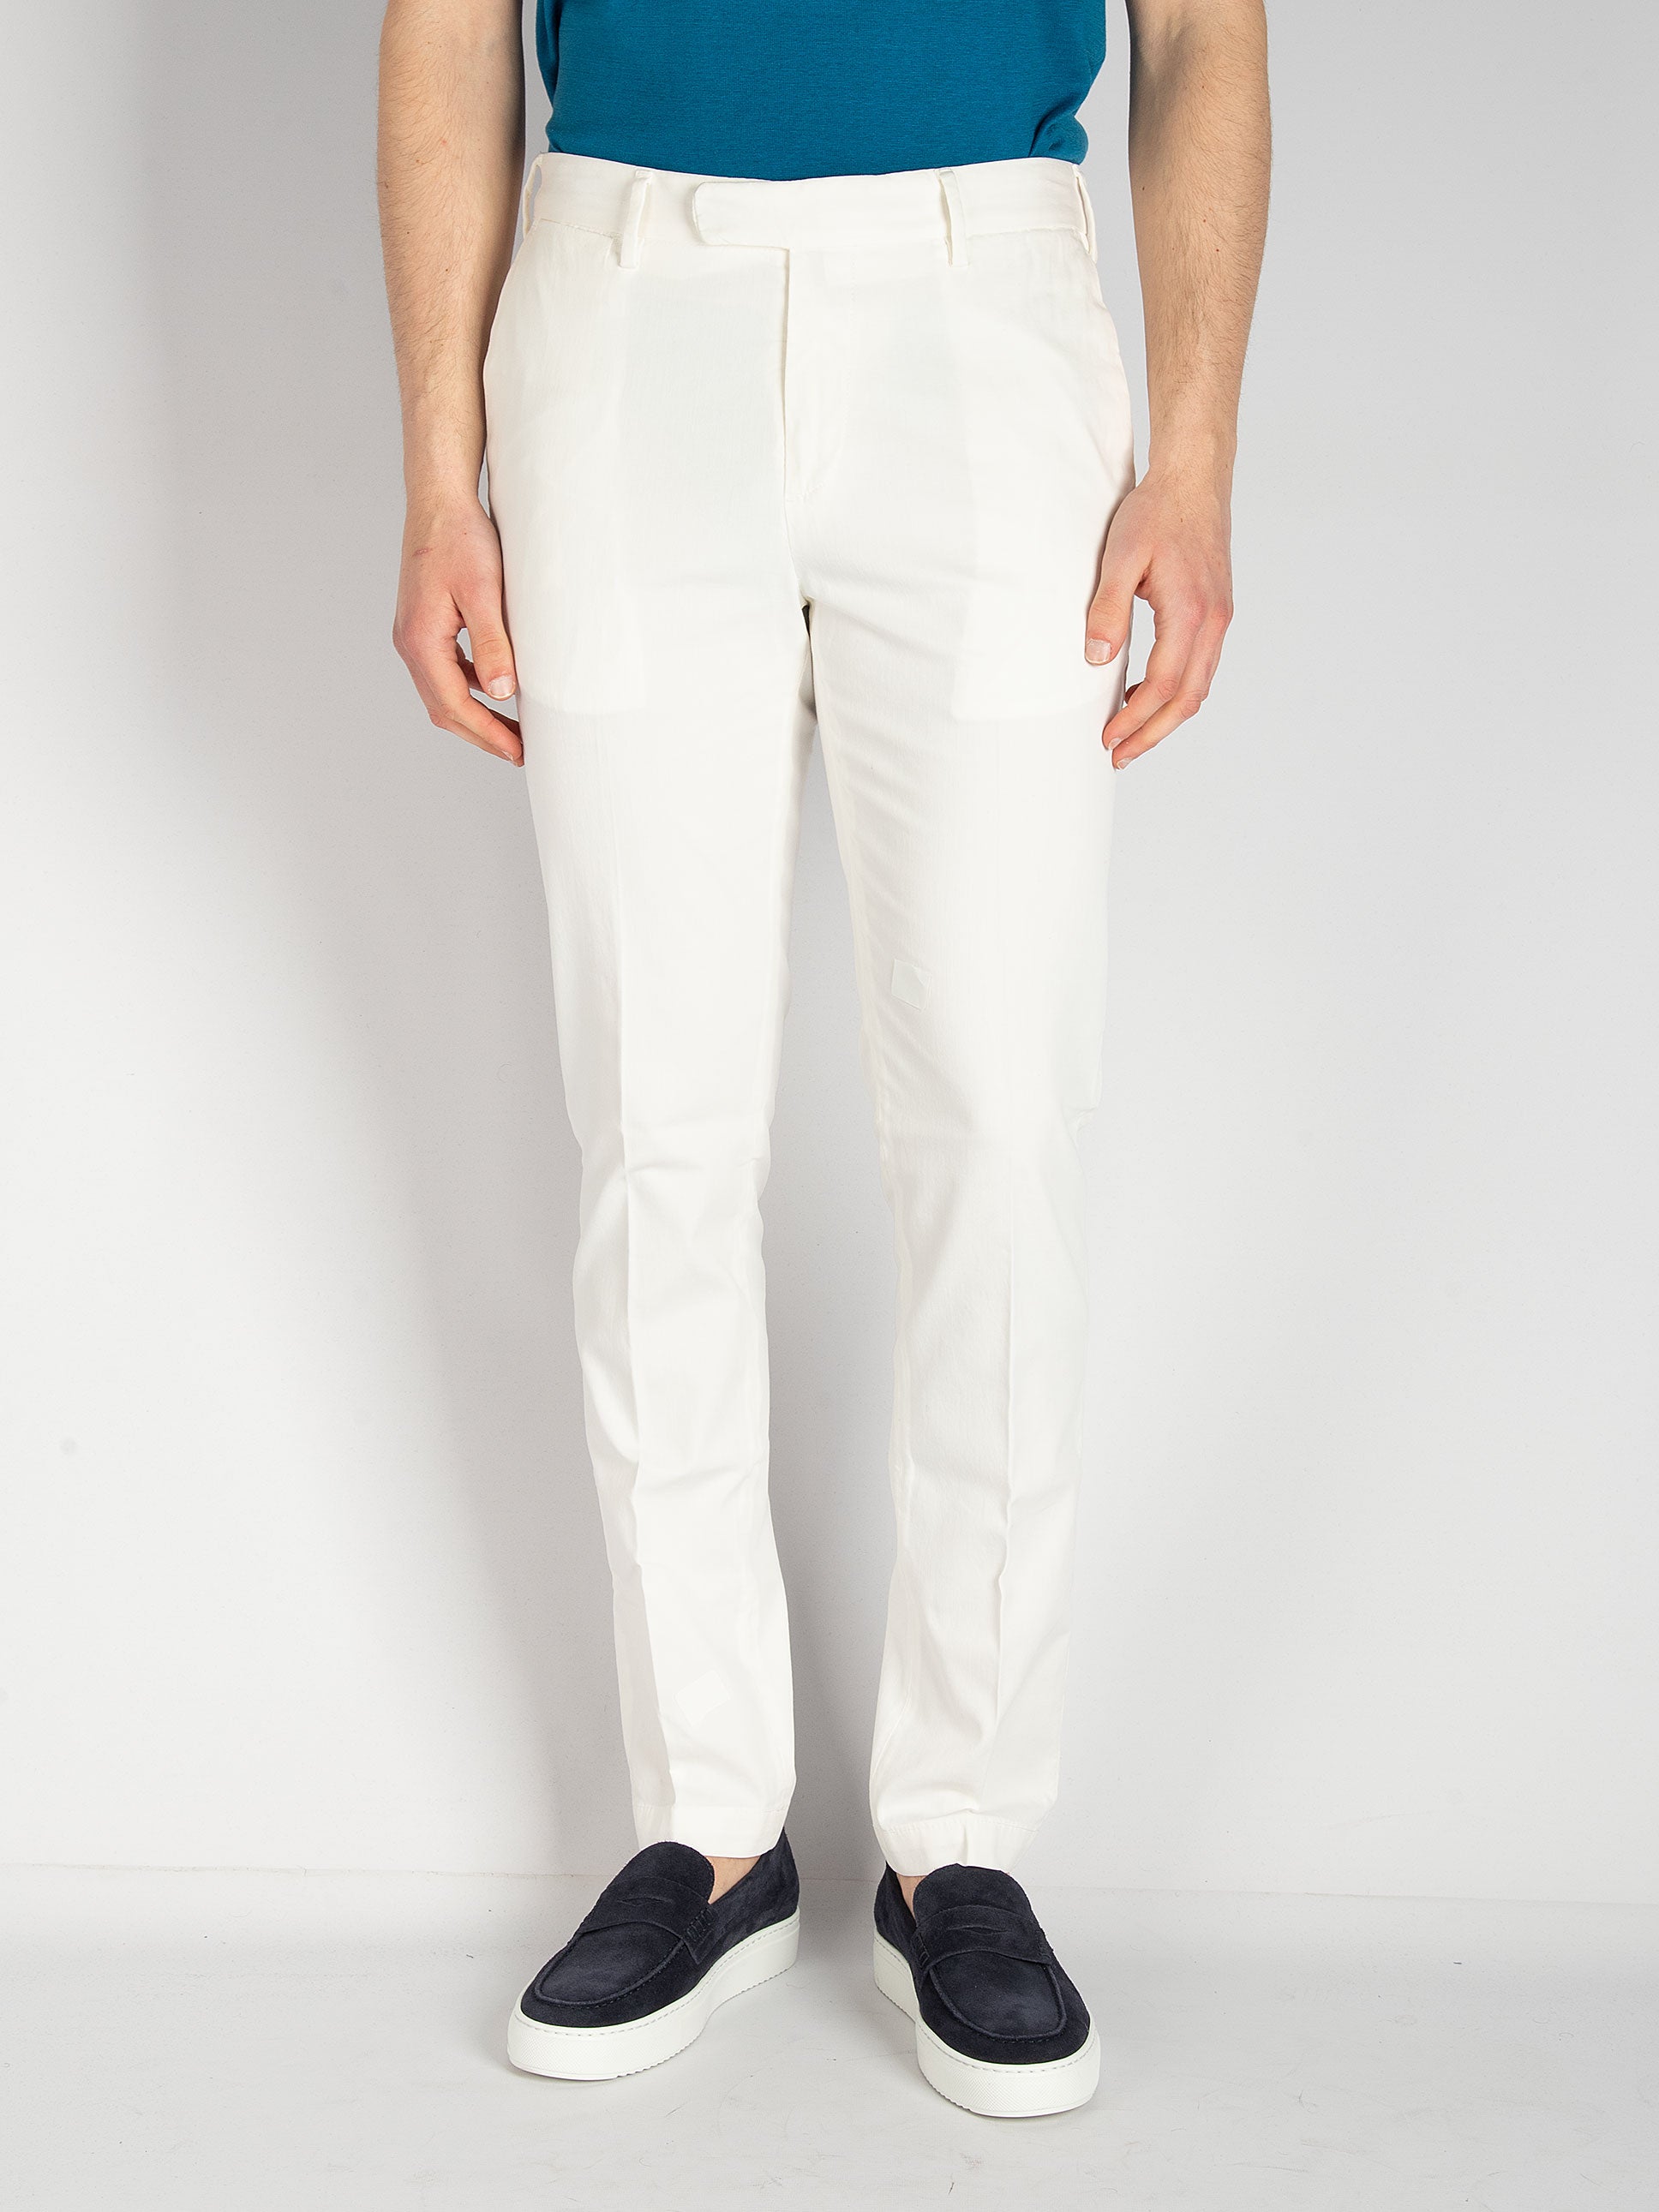 Pantalone DVR3 Cotone Seta - Bianco